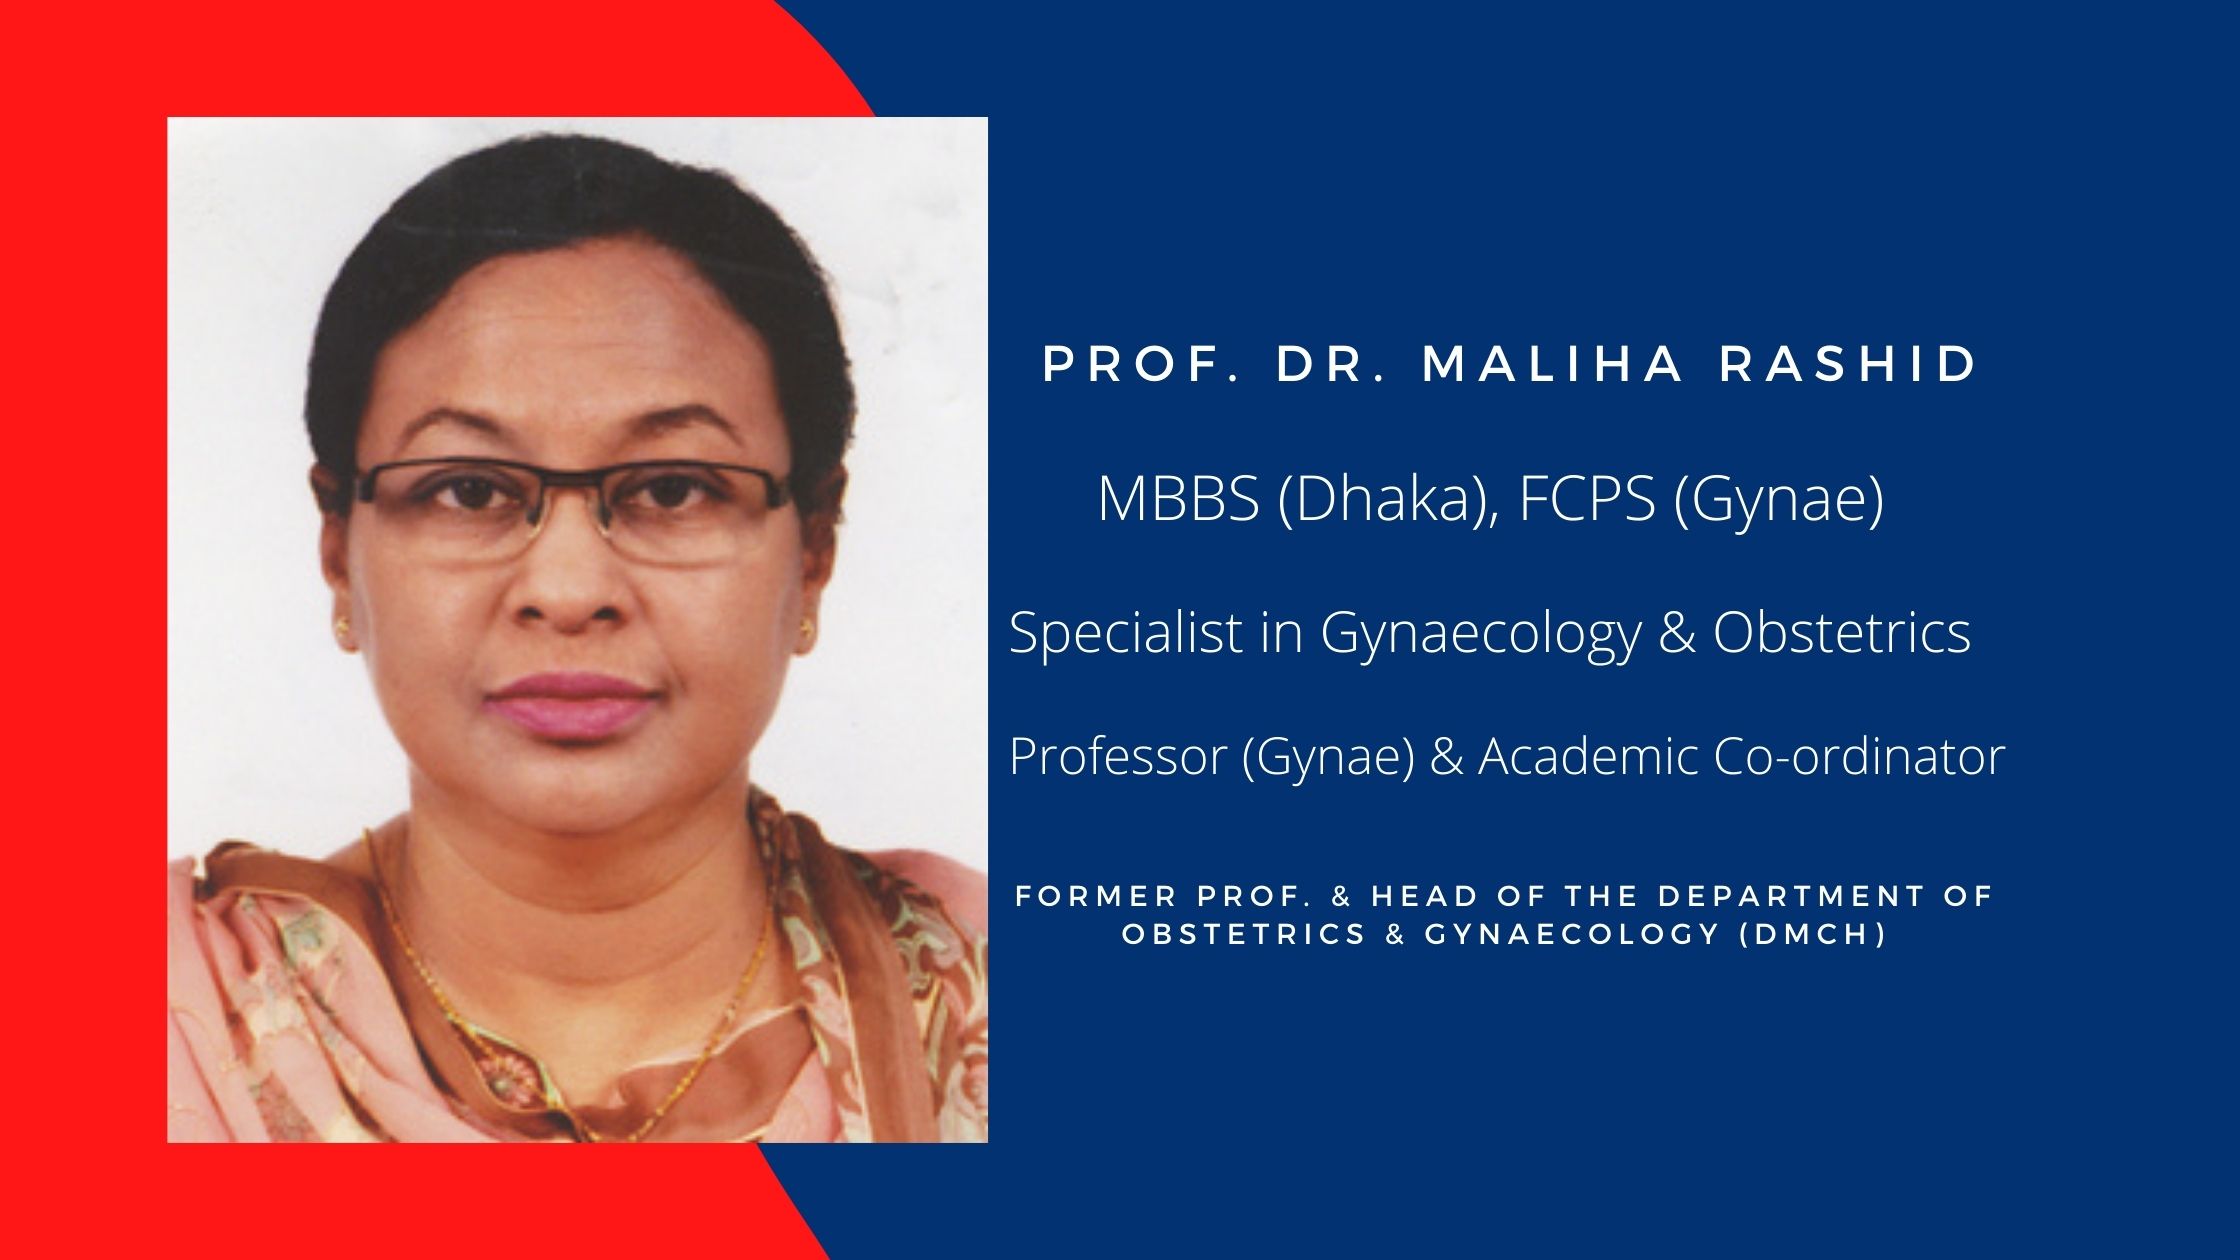 PROF DR MALIHA RASHID Gynecology and obstetrics Specialist